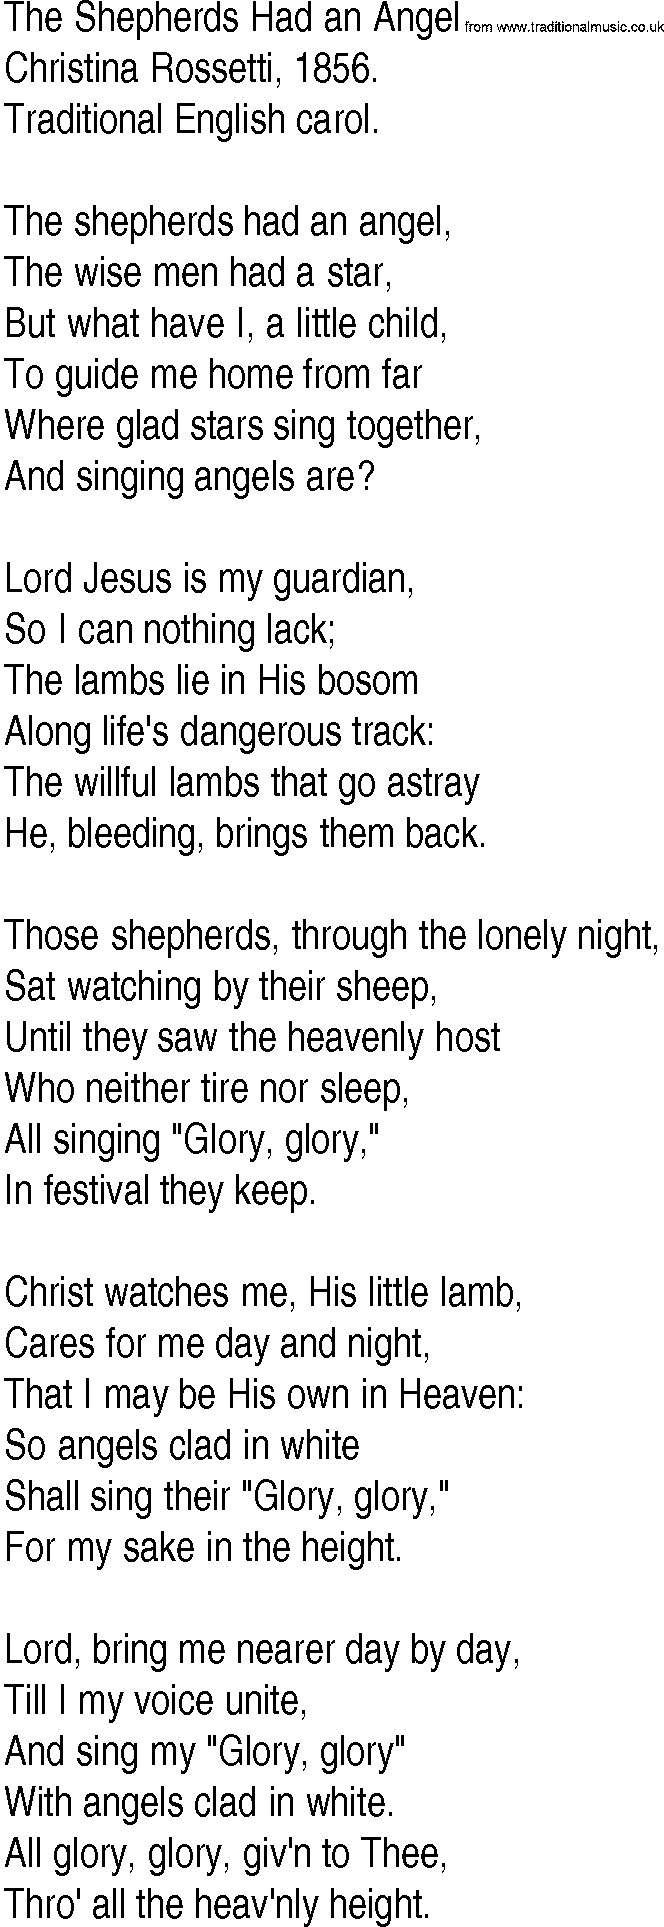 Hymn and Gospel Song: The Shepherds Had an Angel by Christina Rossetti lyrics